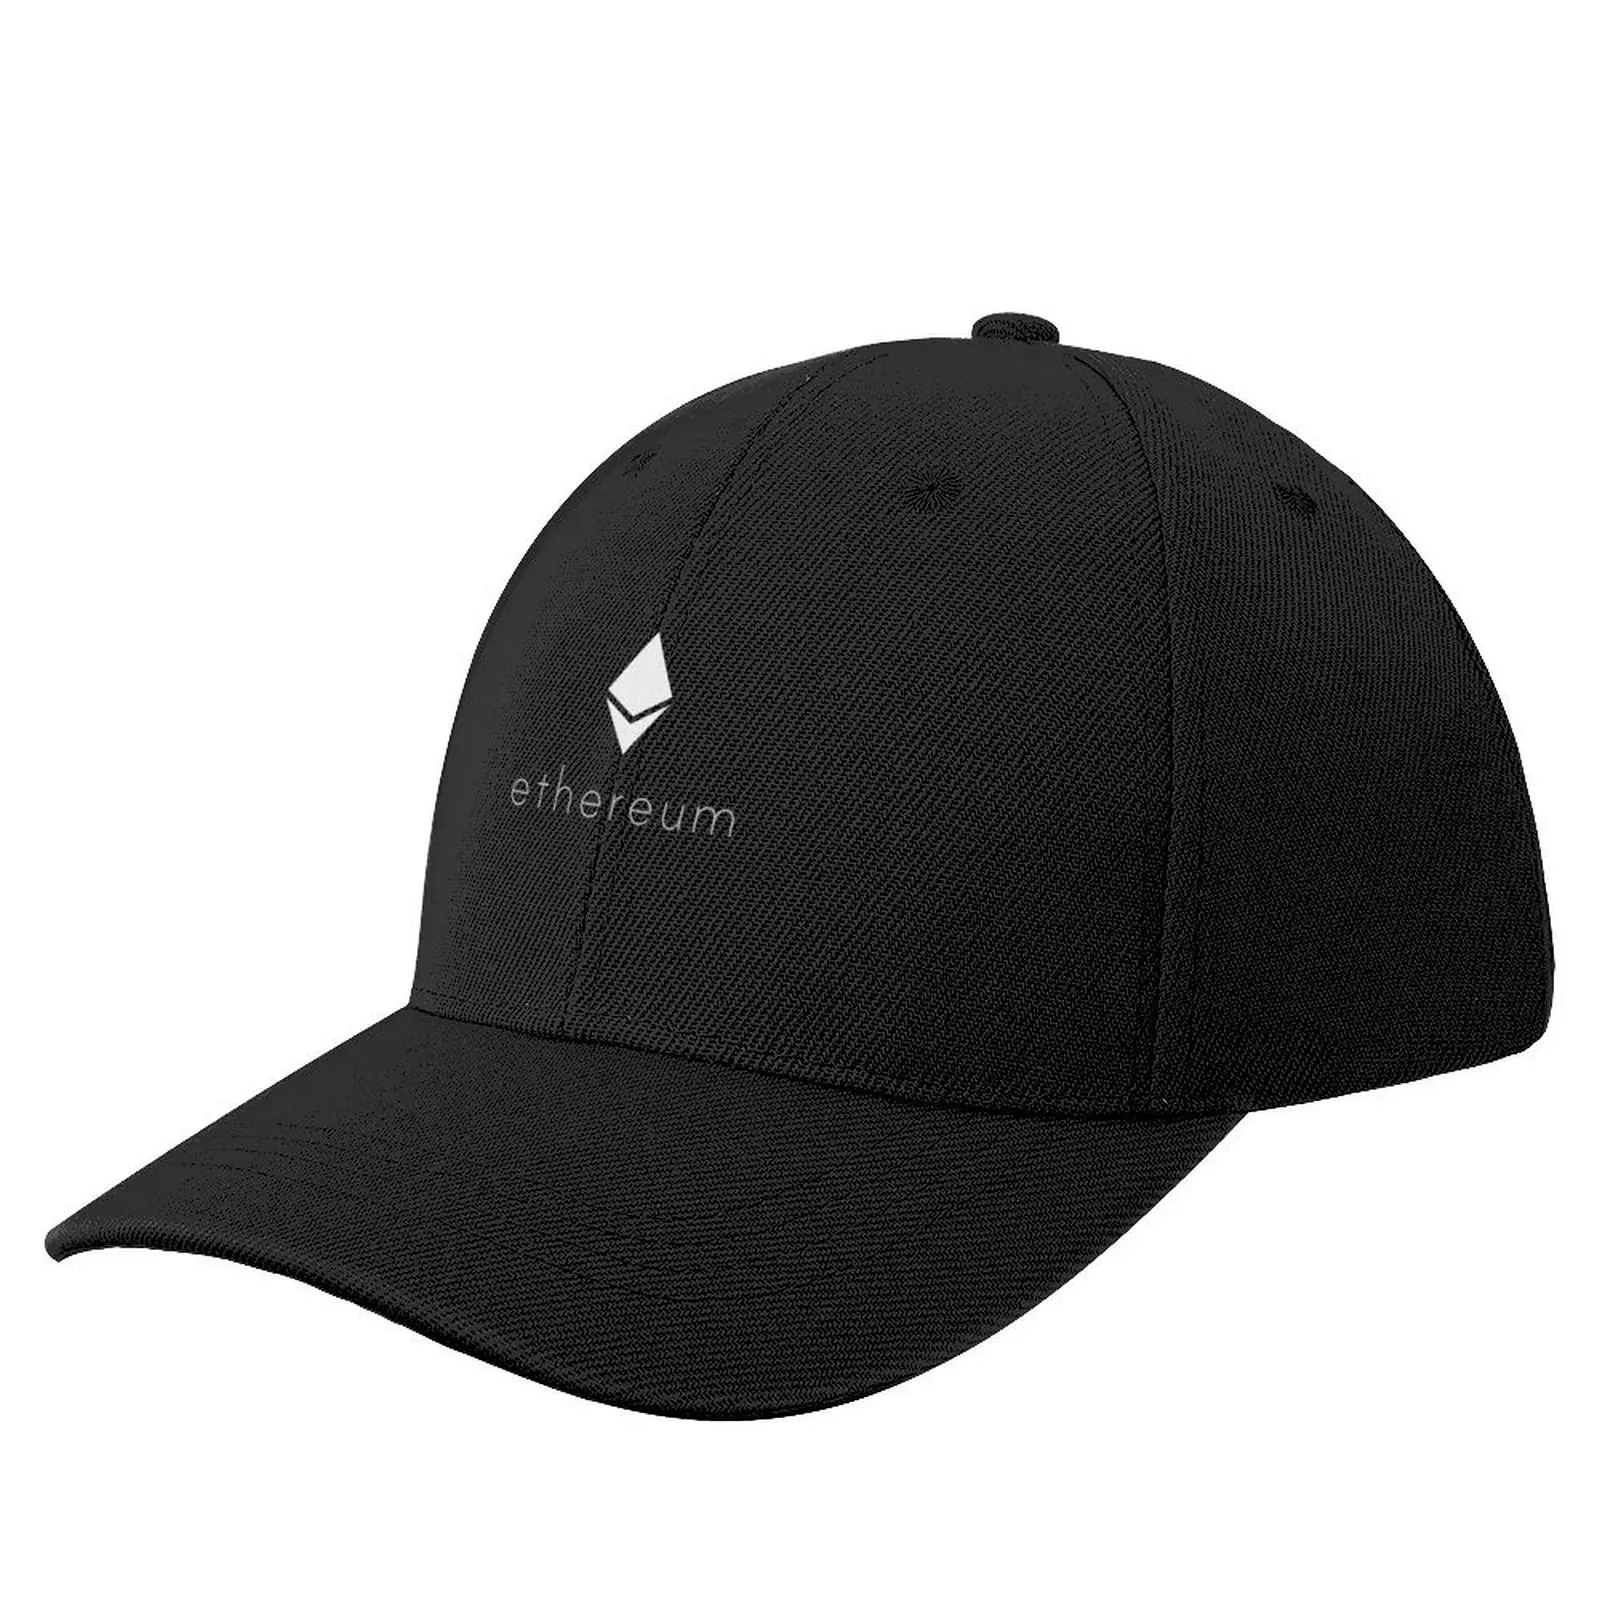 Ethereum Logo ETH Coin Crypto Bitcoin Trader Miner Gift Baseball Cap Anime Hat Brand Man cap Women's Hats Men's